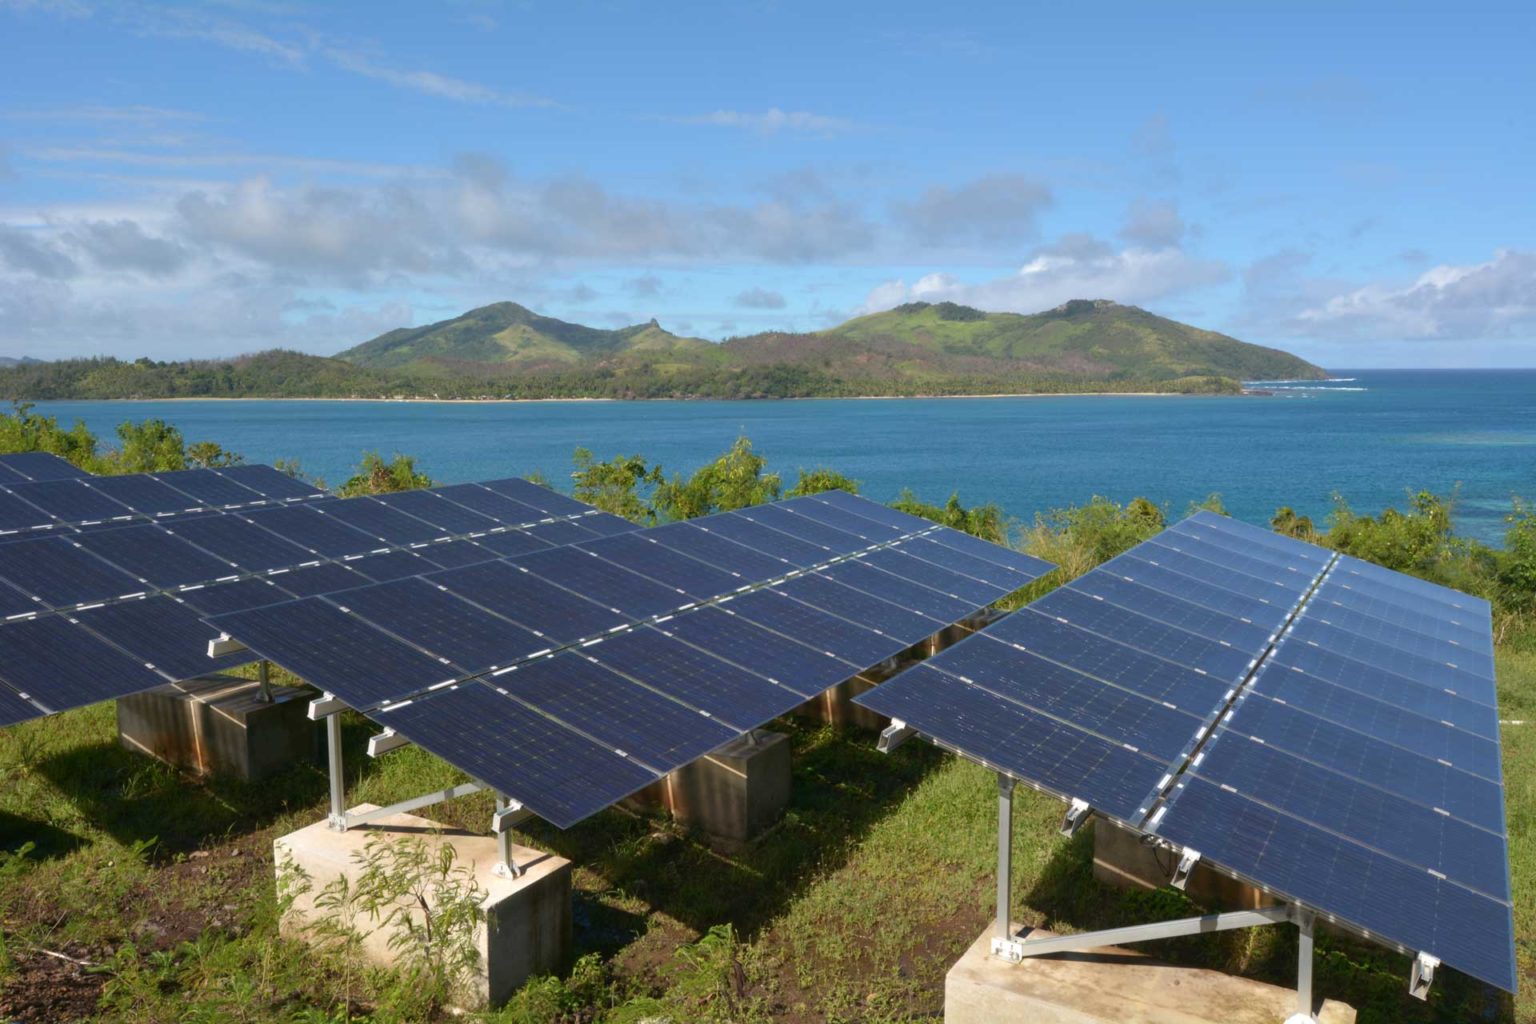 Solar array next to ocean on remote island